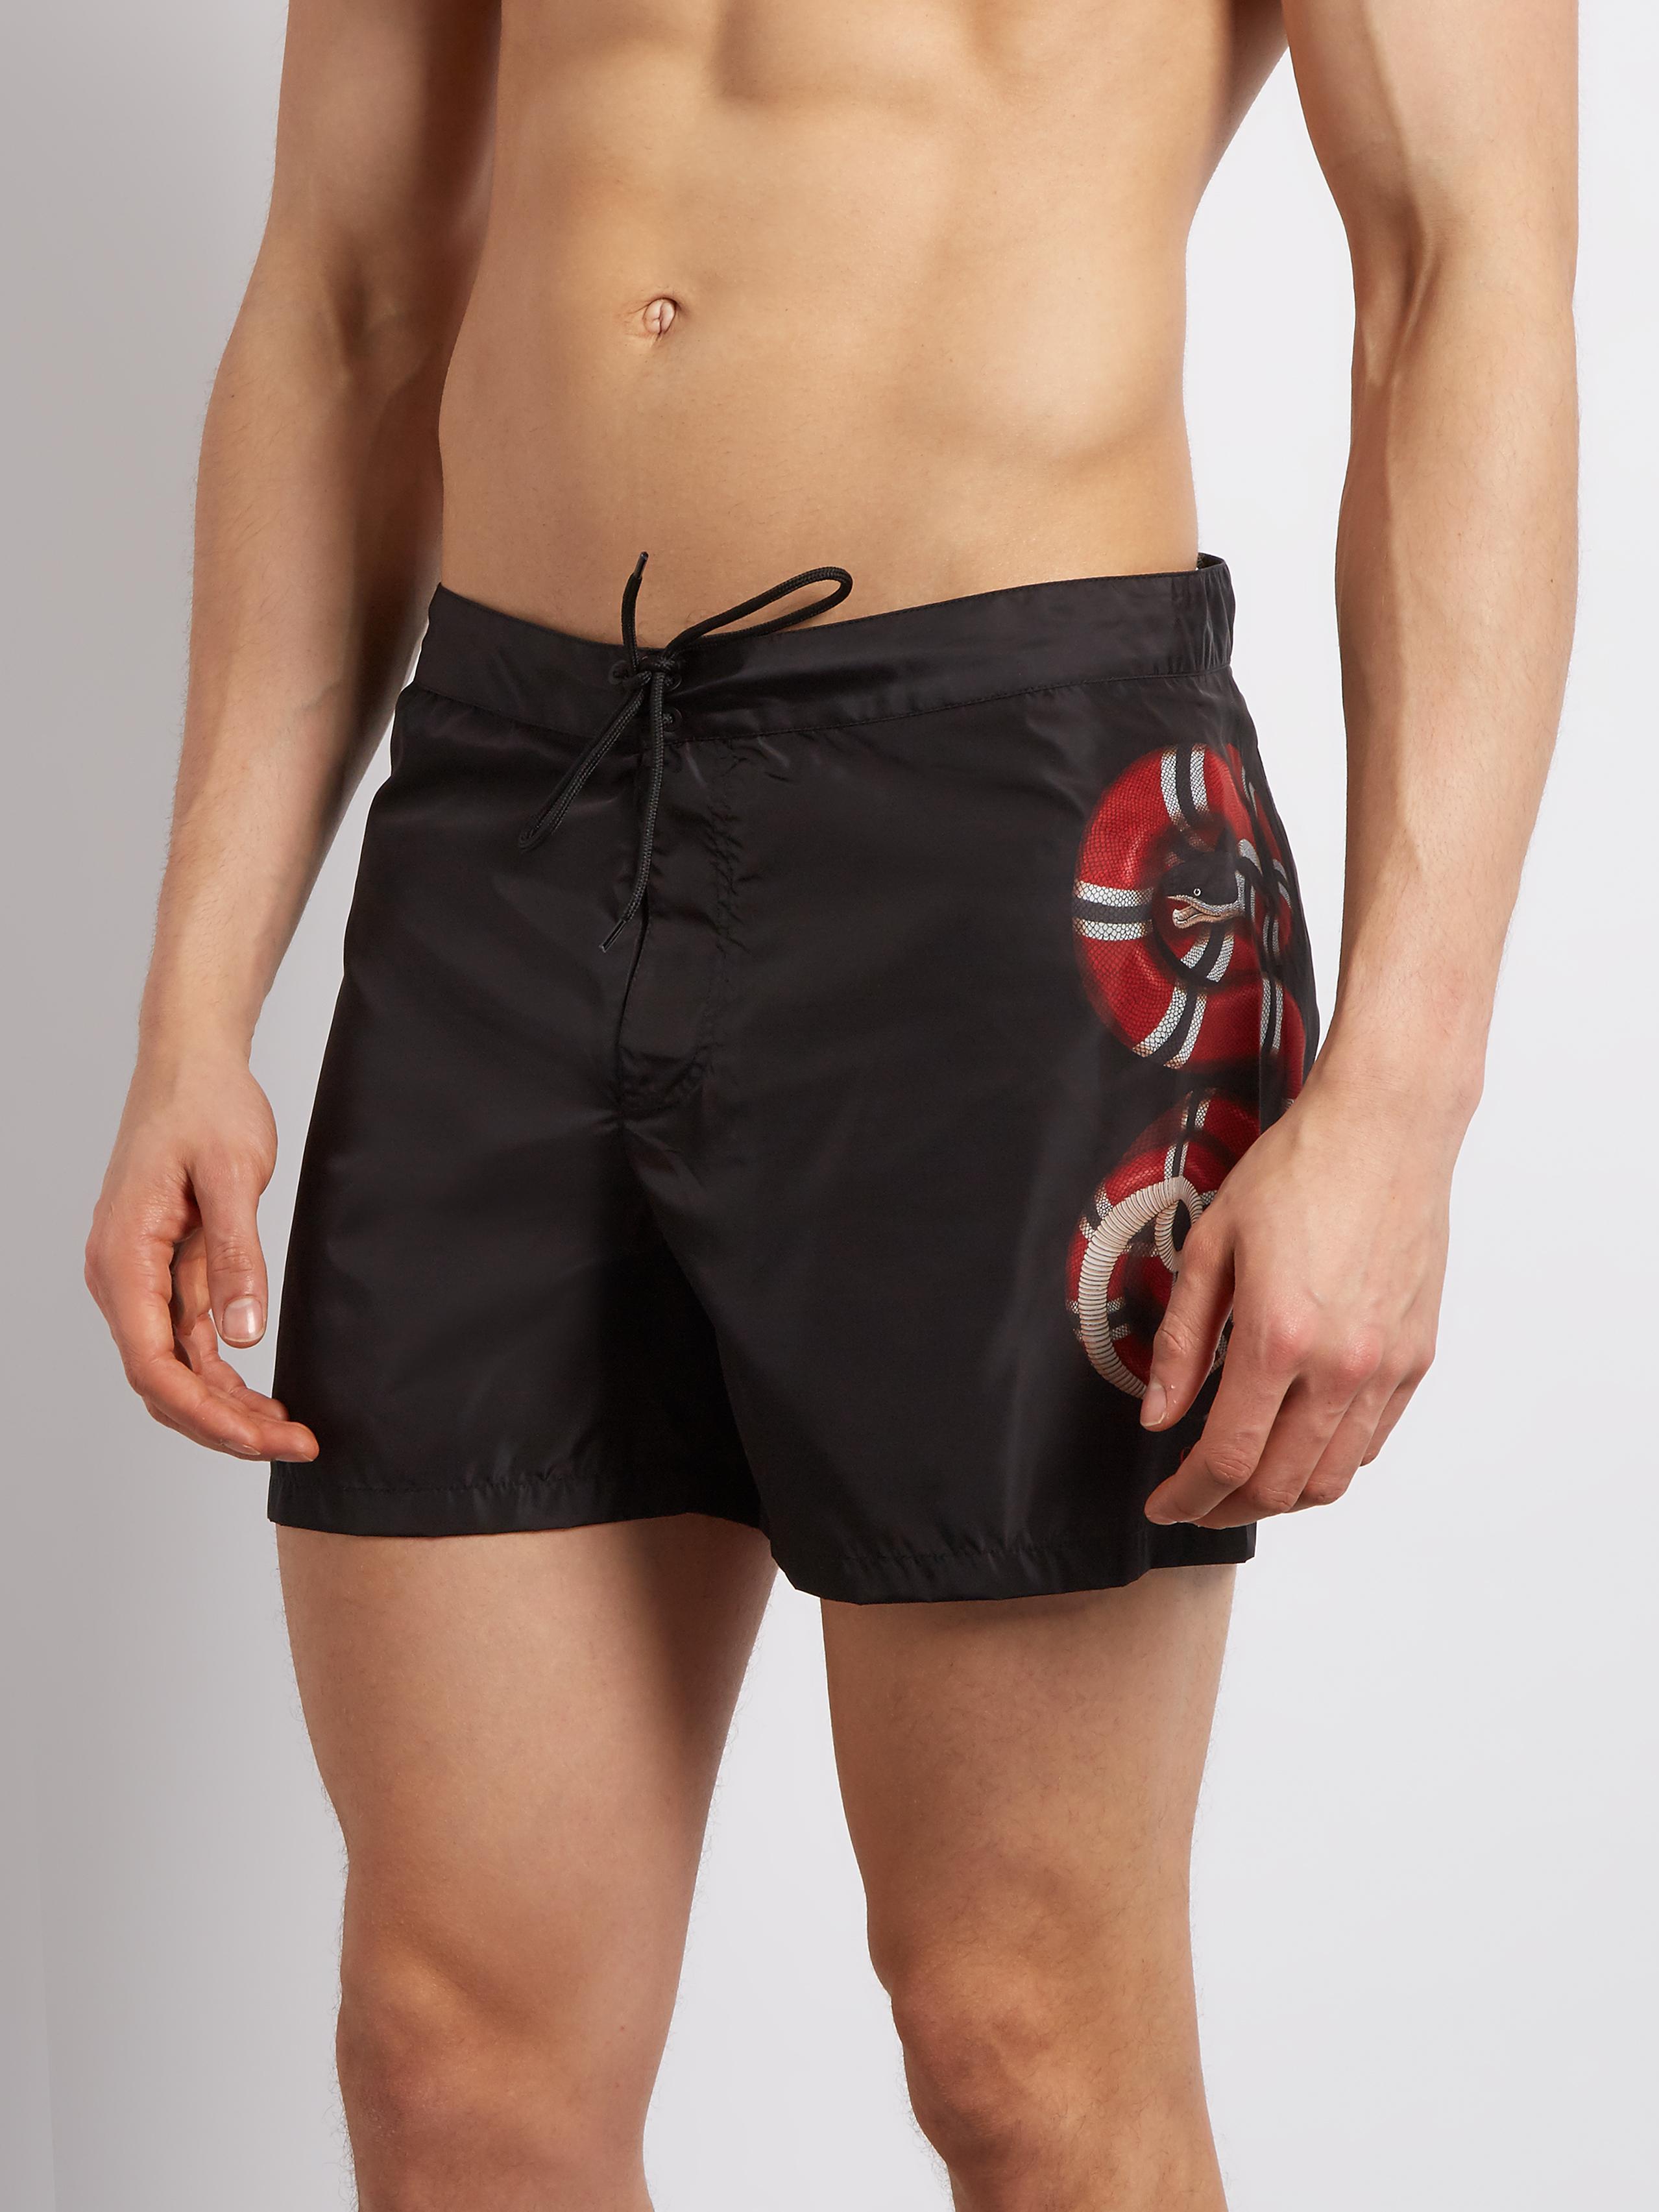 Gucci Synthetic Snake-print Taffeta Swim Shorts in Black for Men - Lyst